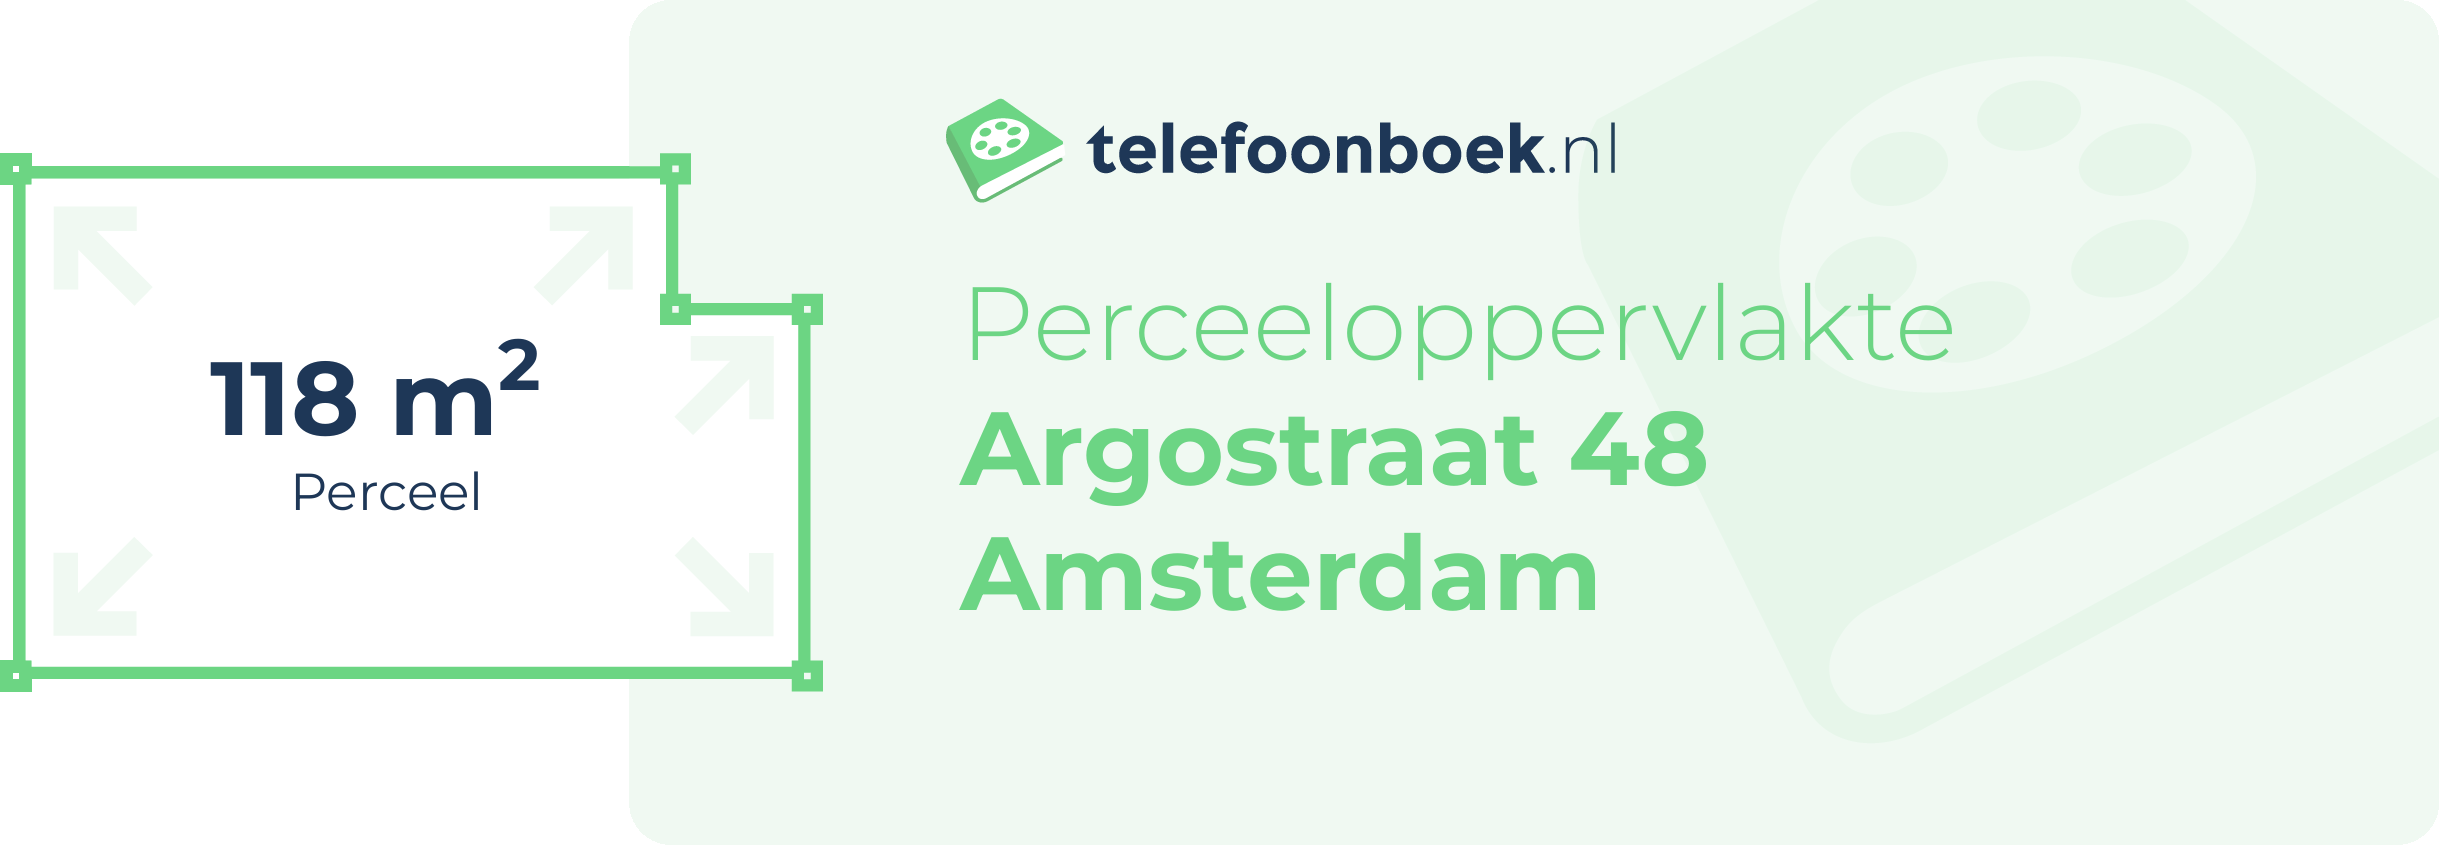 Perceeloppervlakte Argostraat 48 Amsterdam